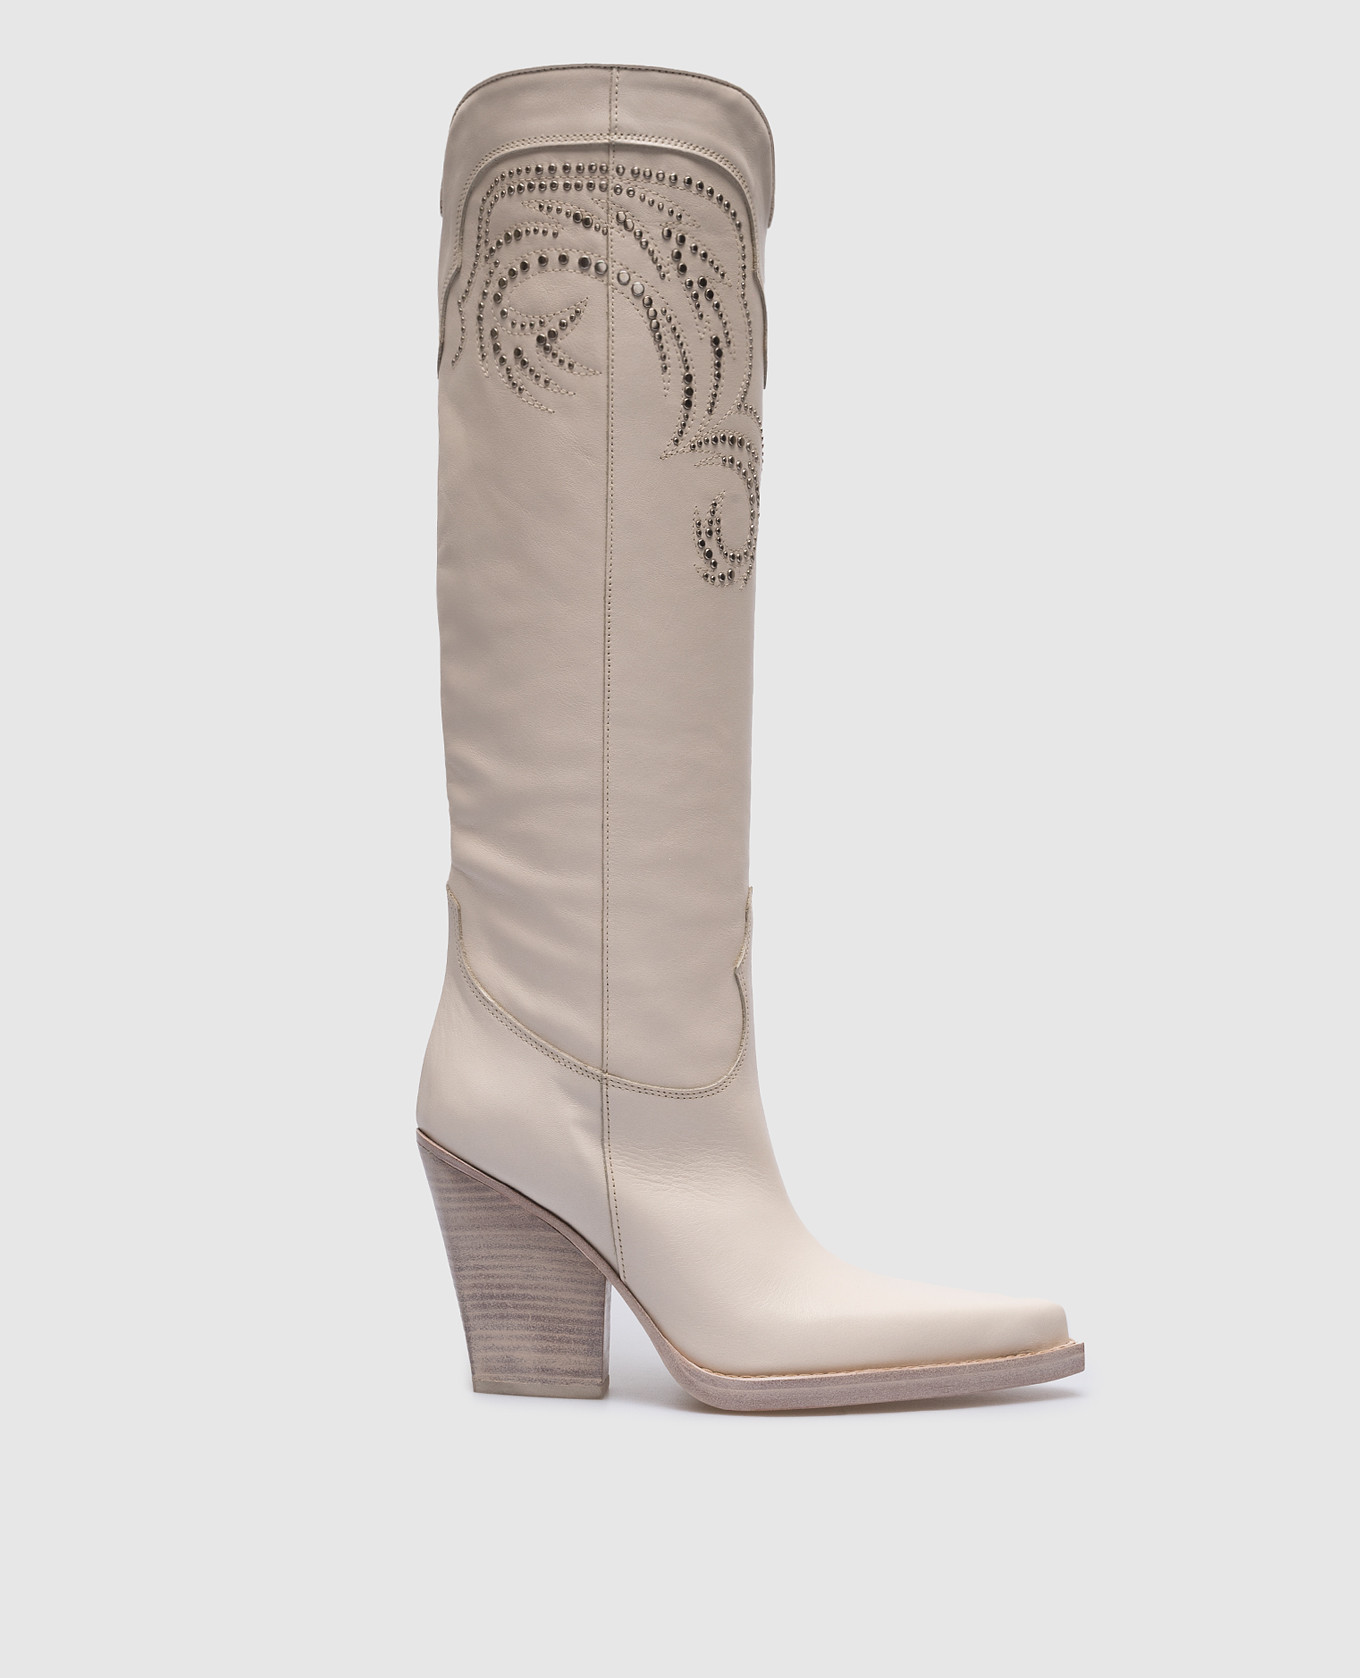 El Dorado white leather boots